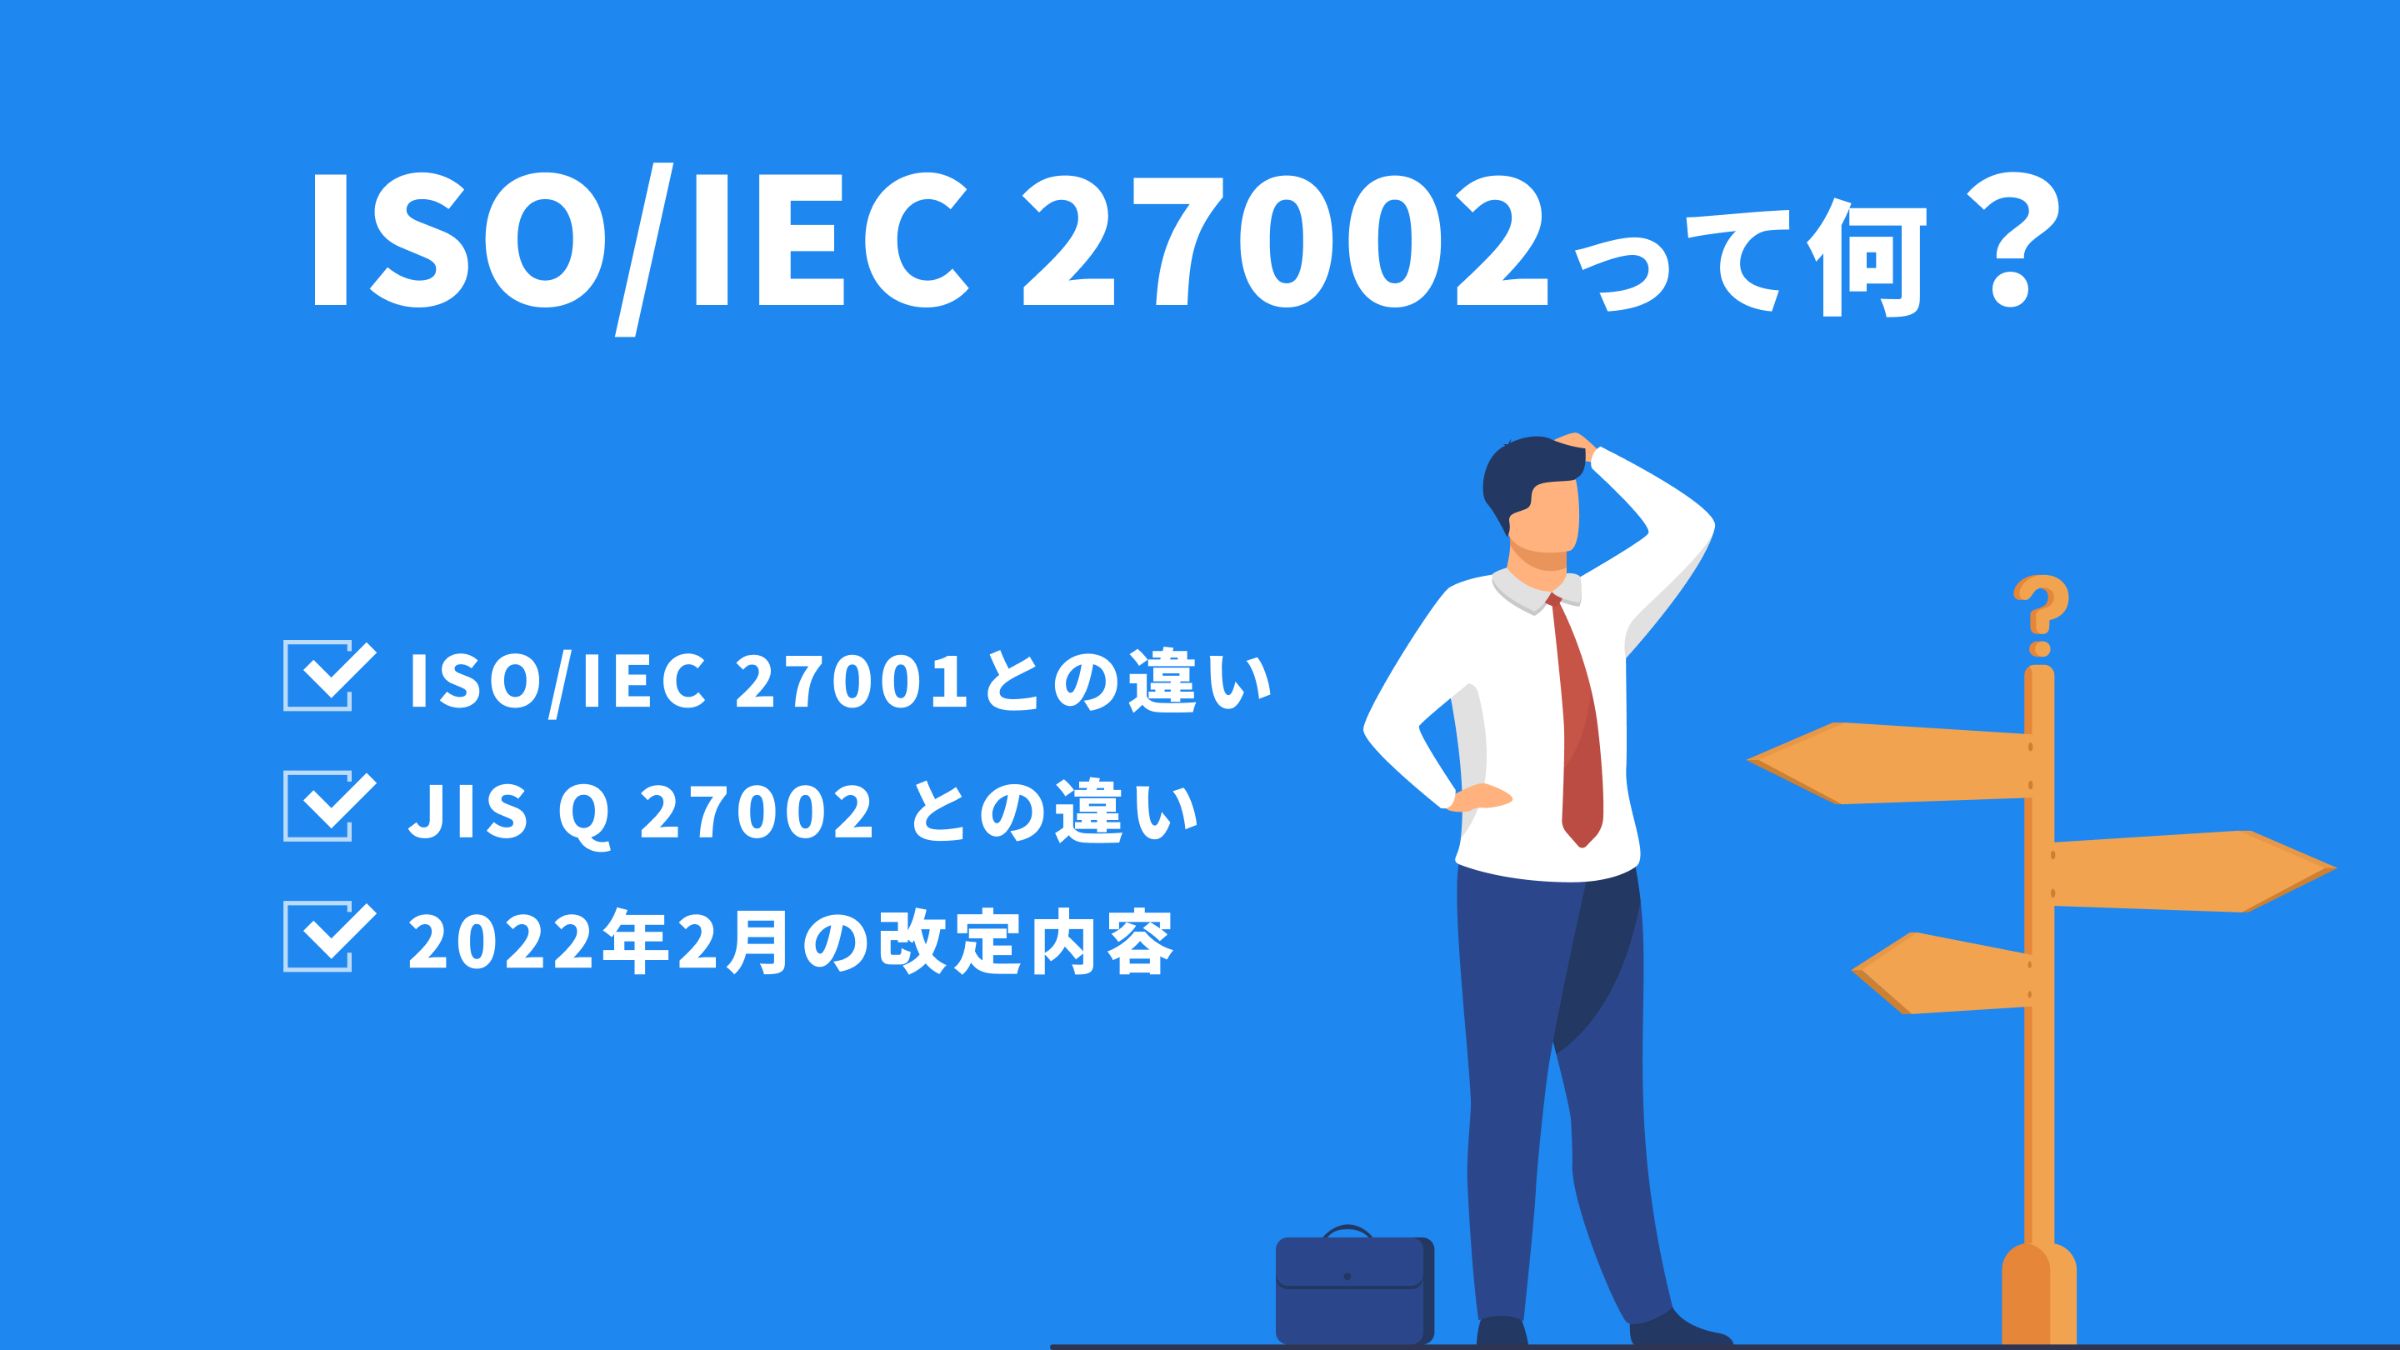 ISO/IEC 27002』とは？『 ISO/IEC 27001』との違いや2022年2月の改定